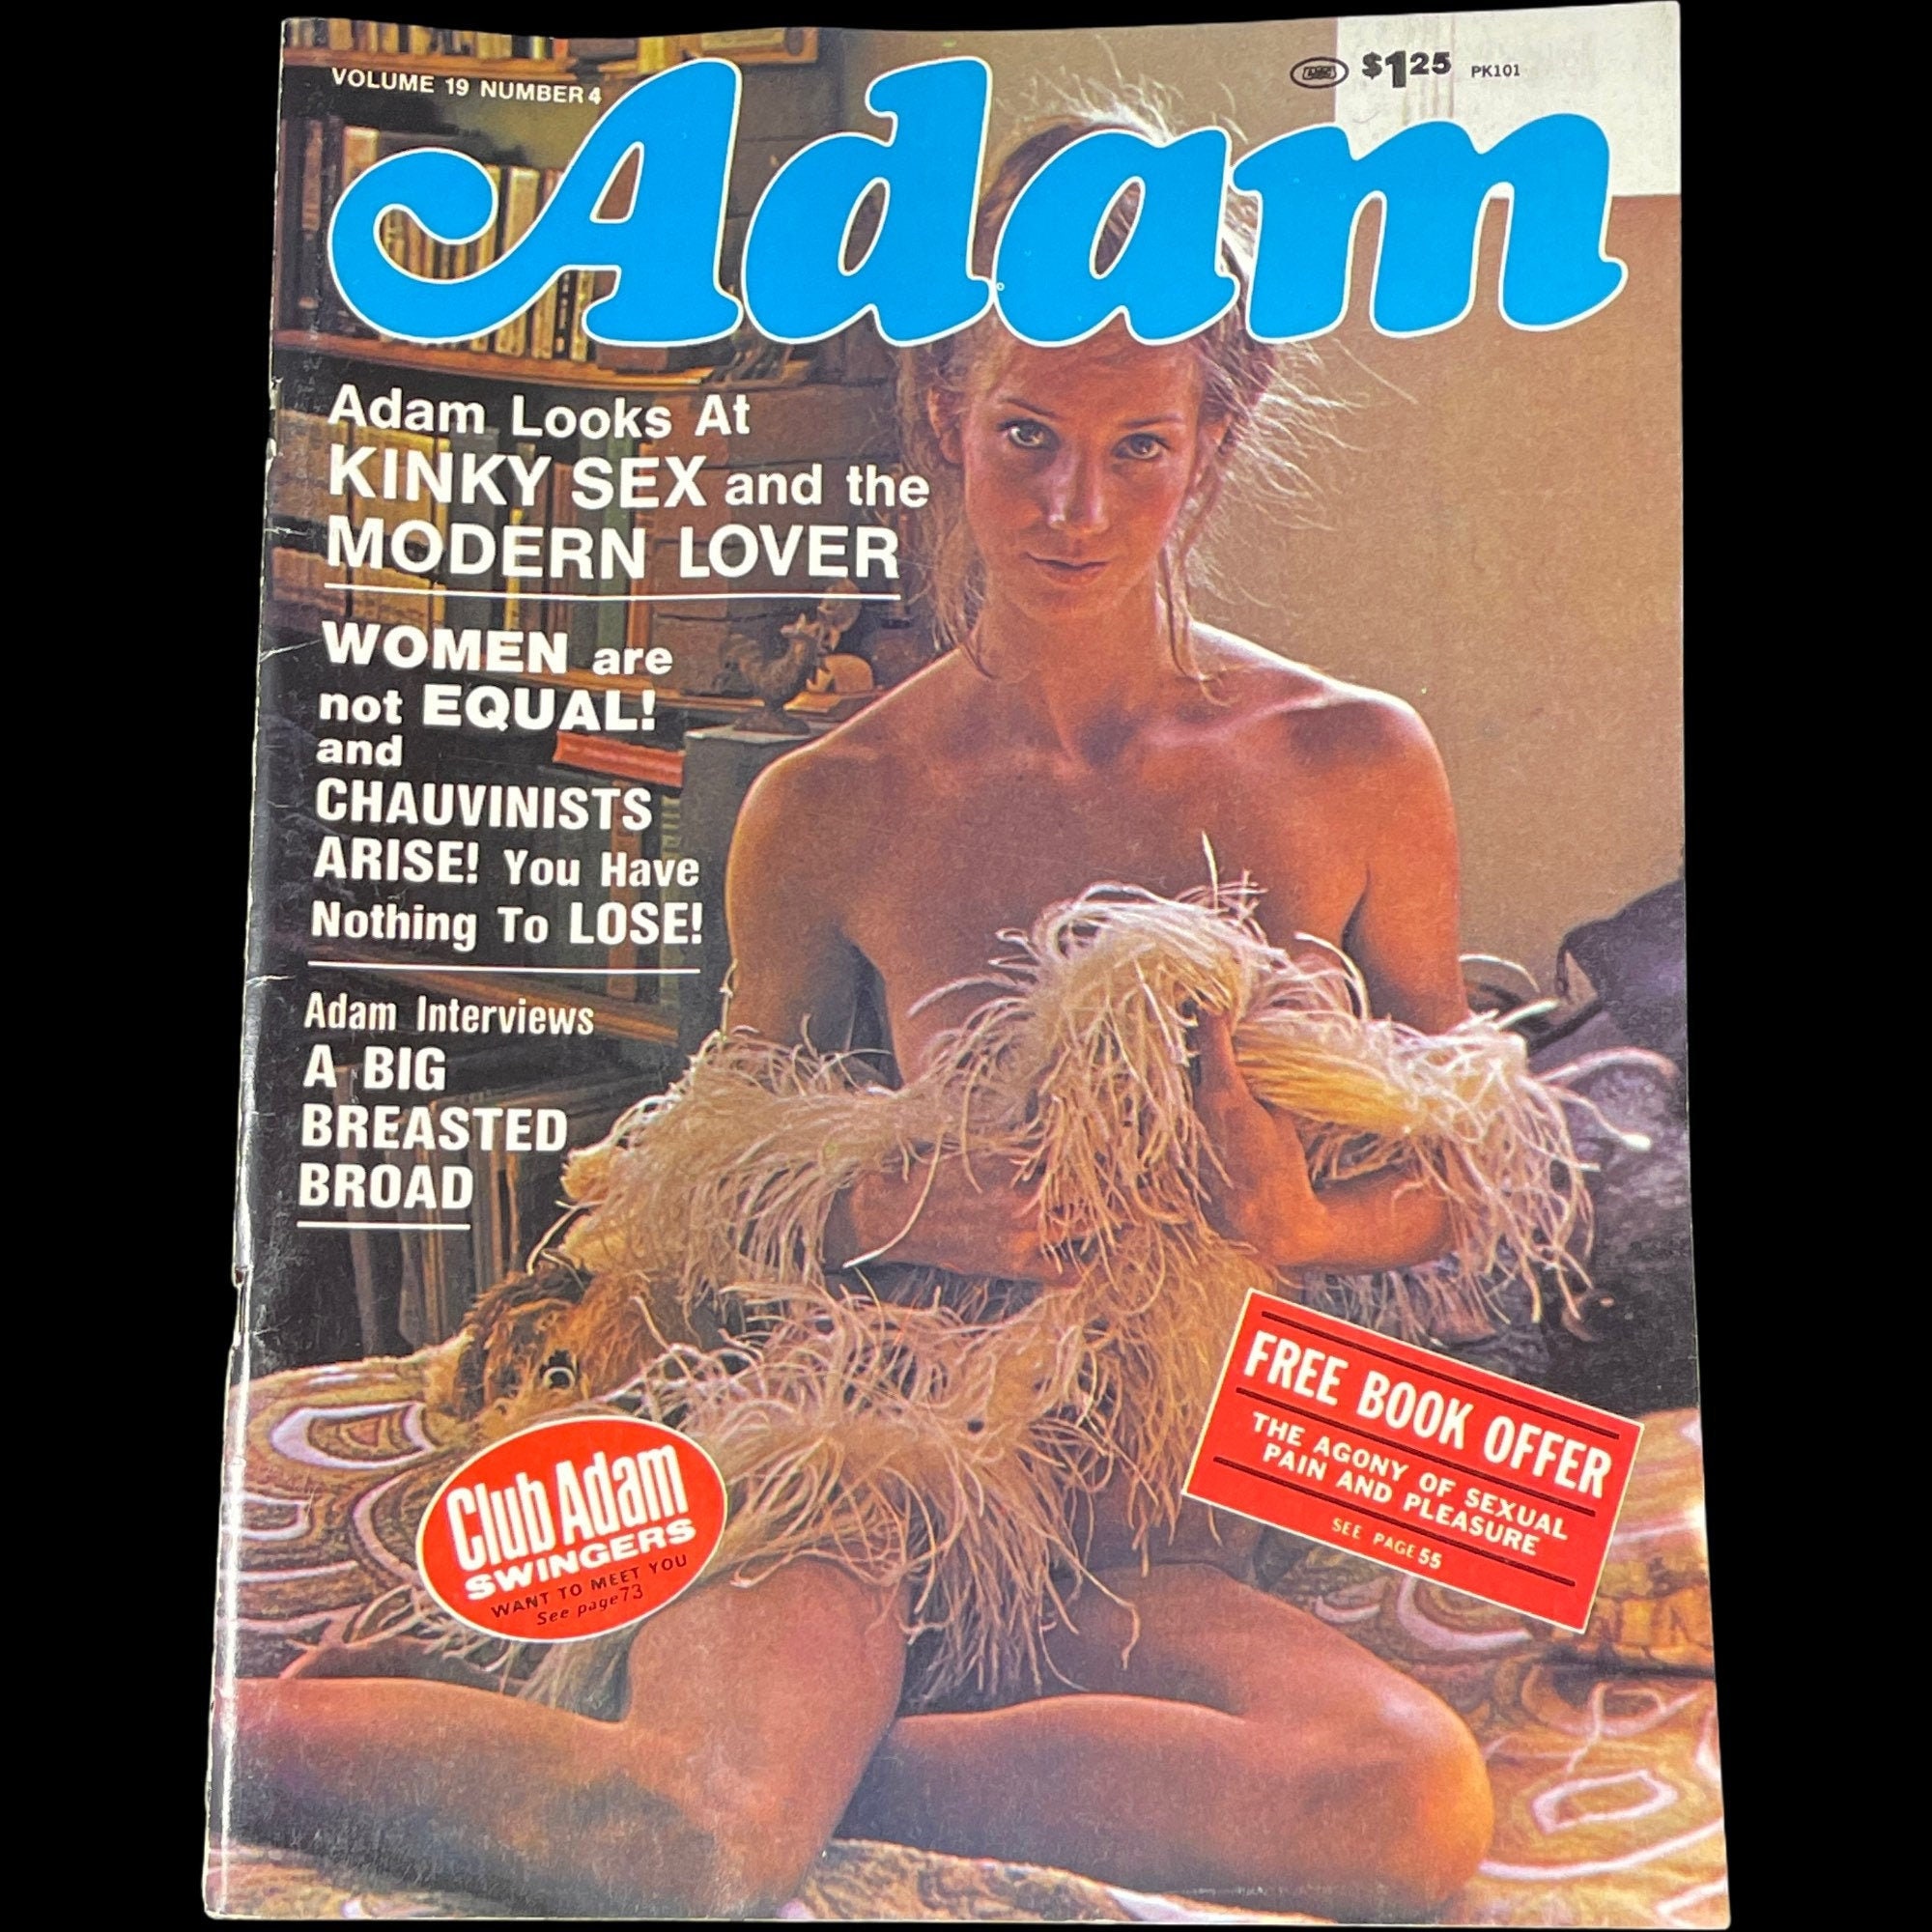 Adam Magazine a Volume 19 Number 4 1975